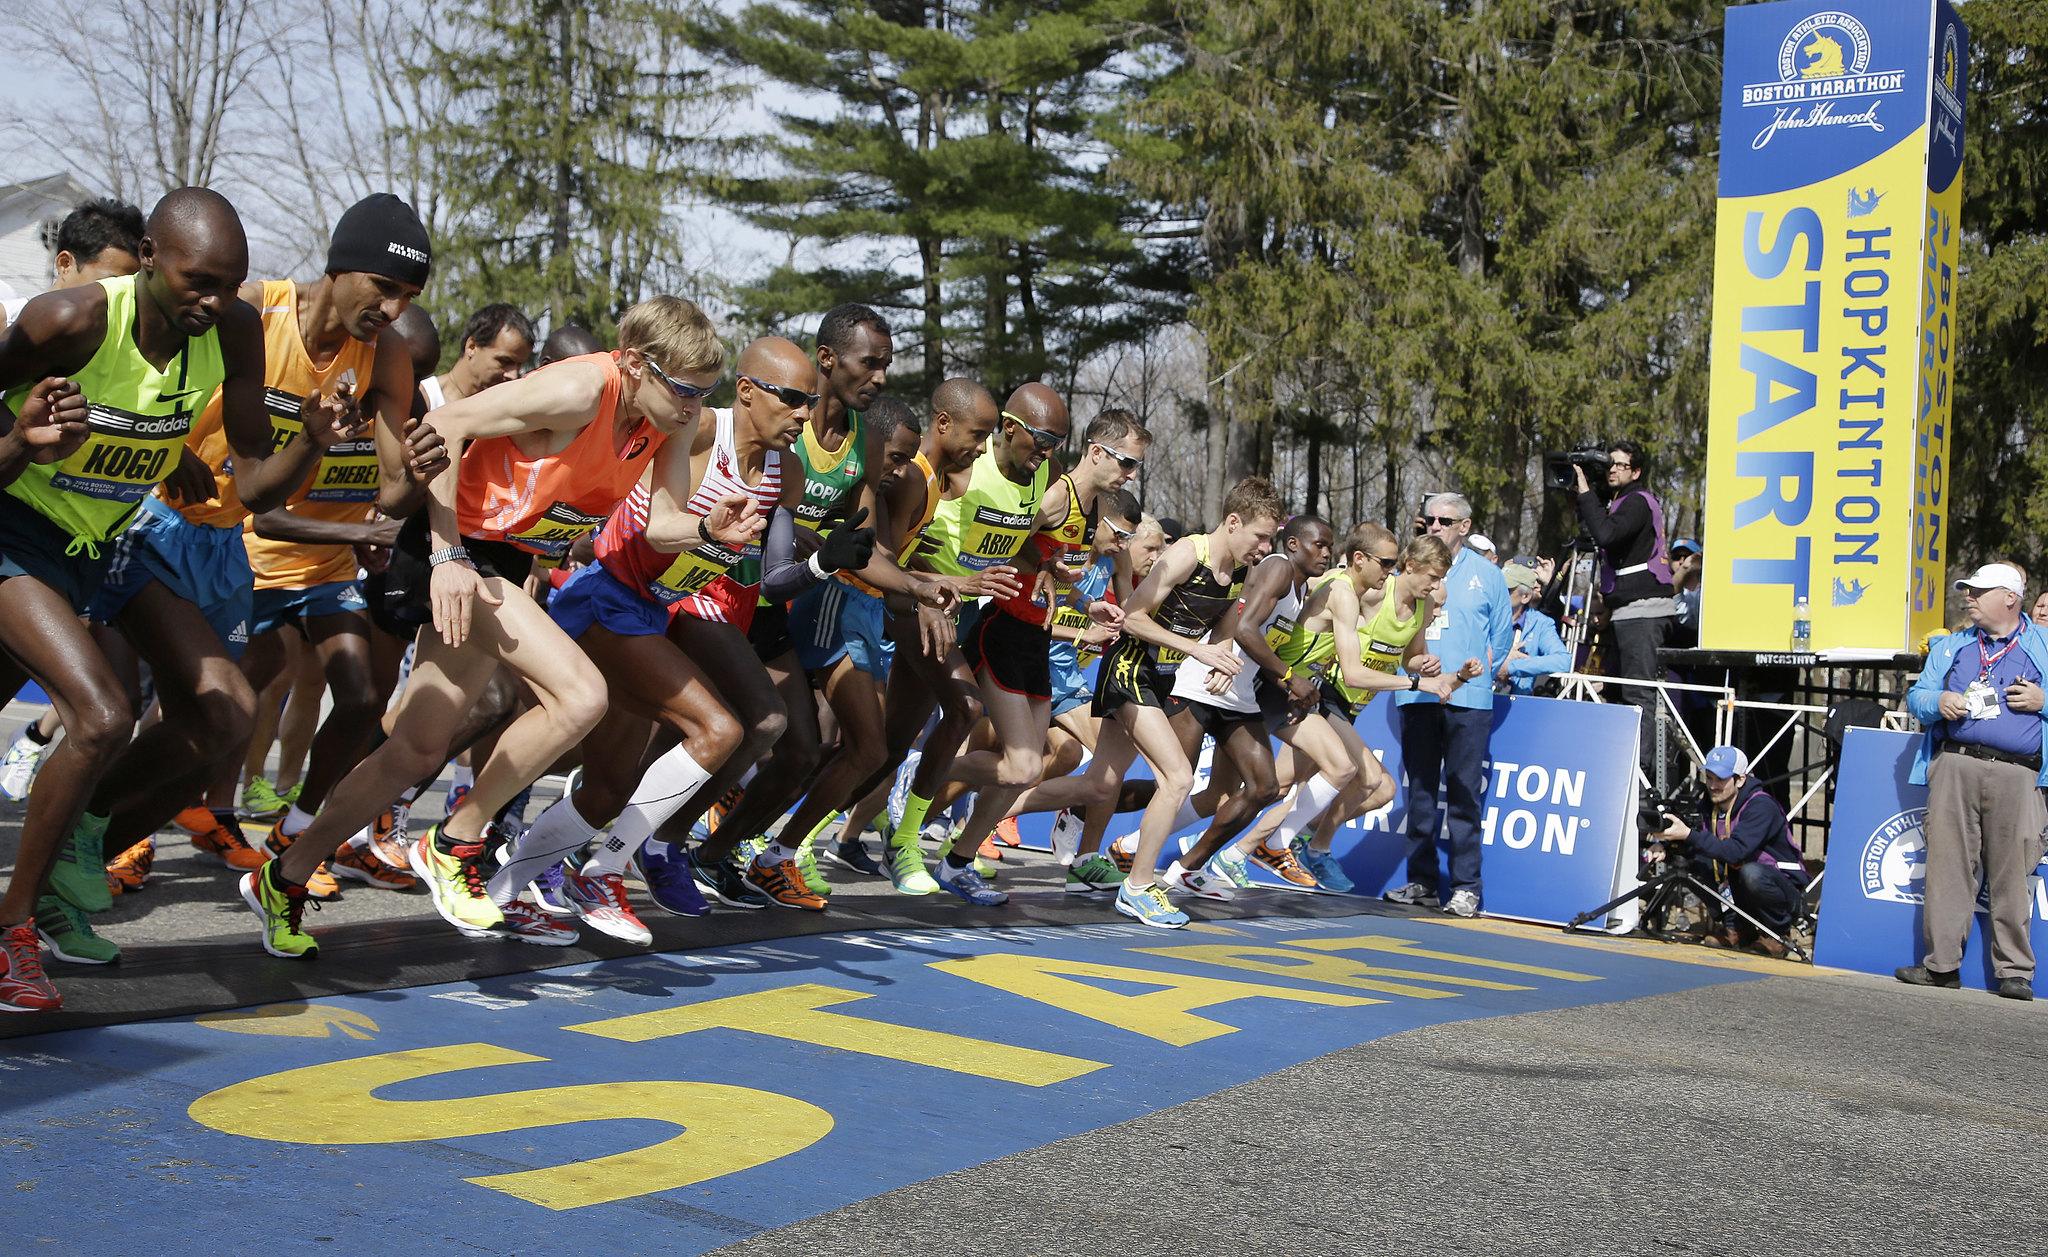 starting line of boston marathon